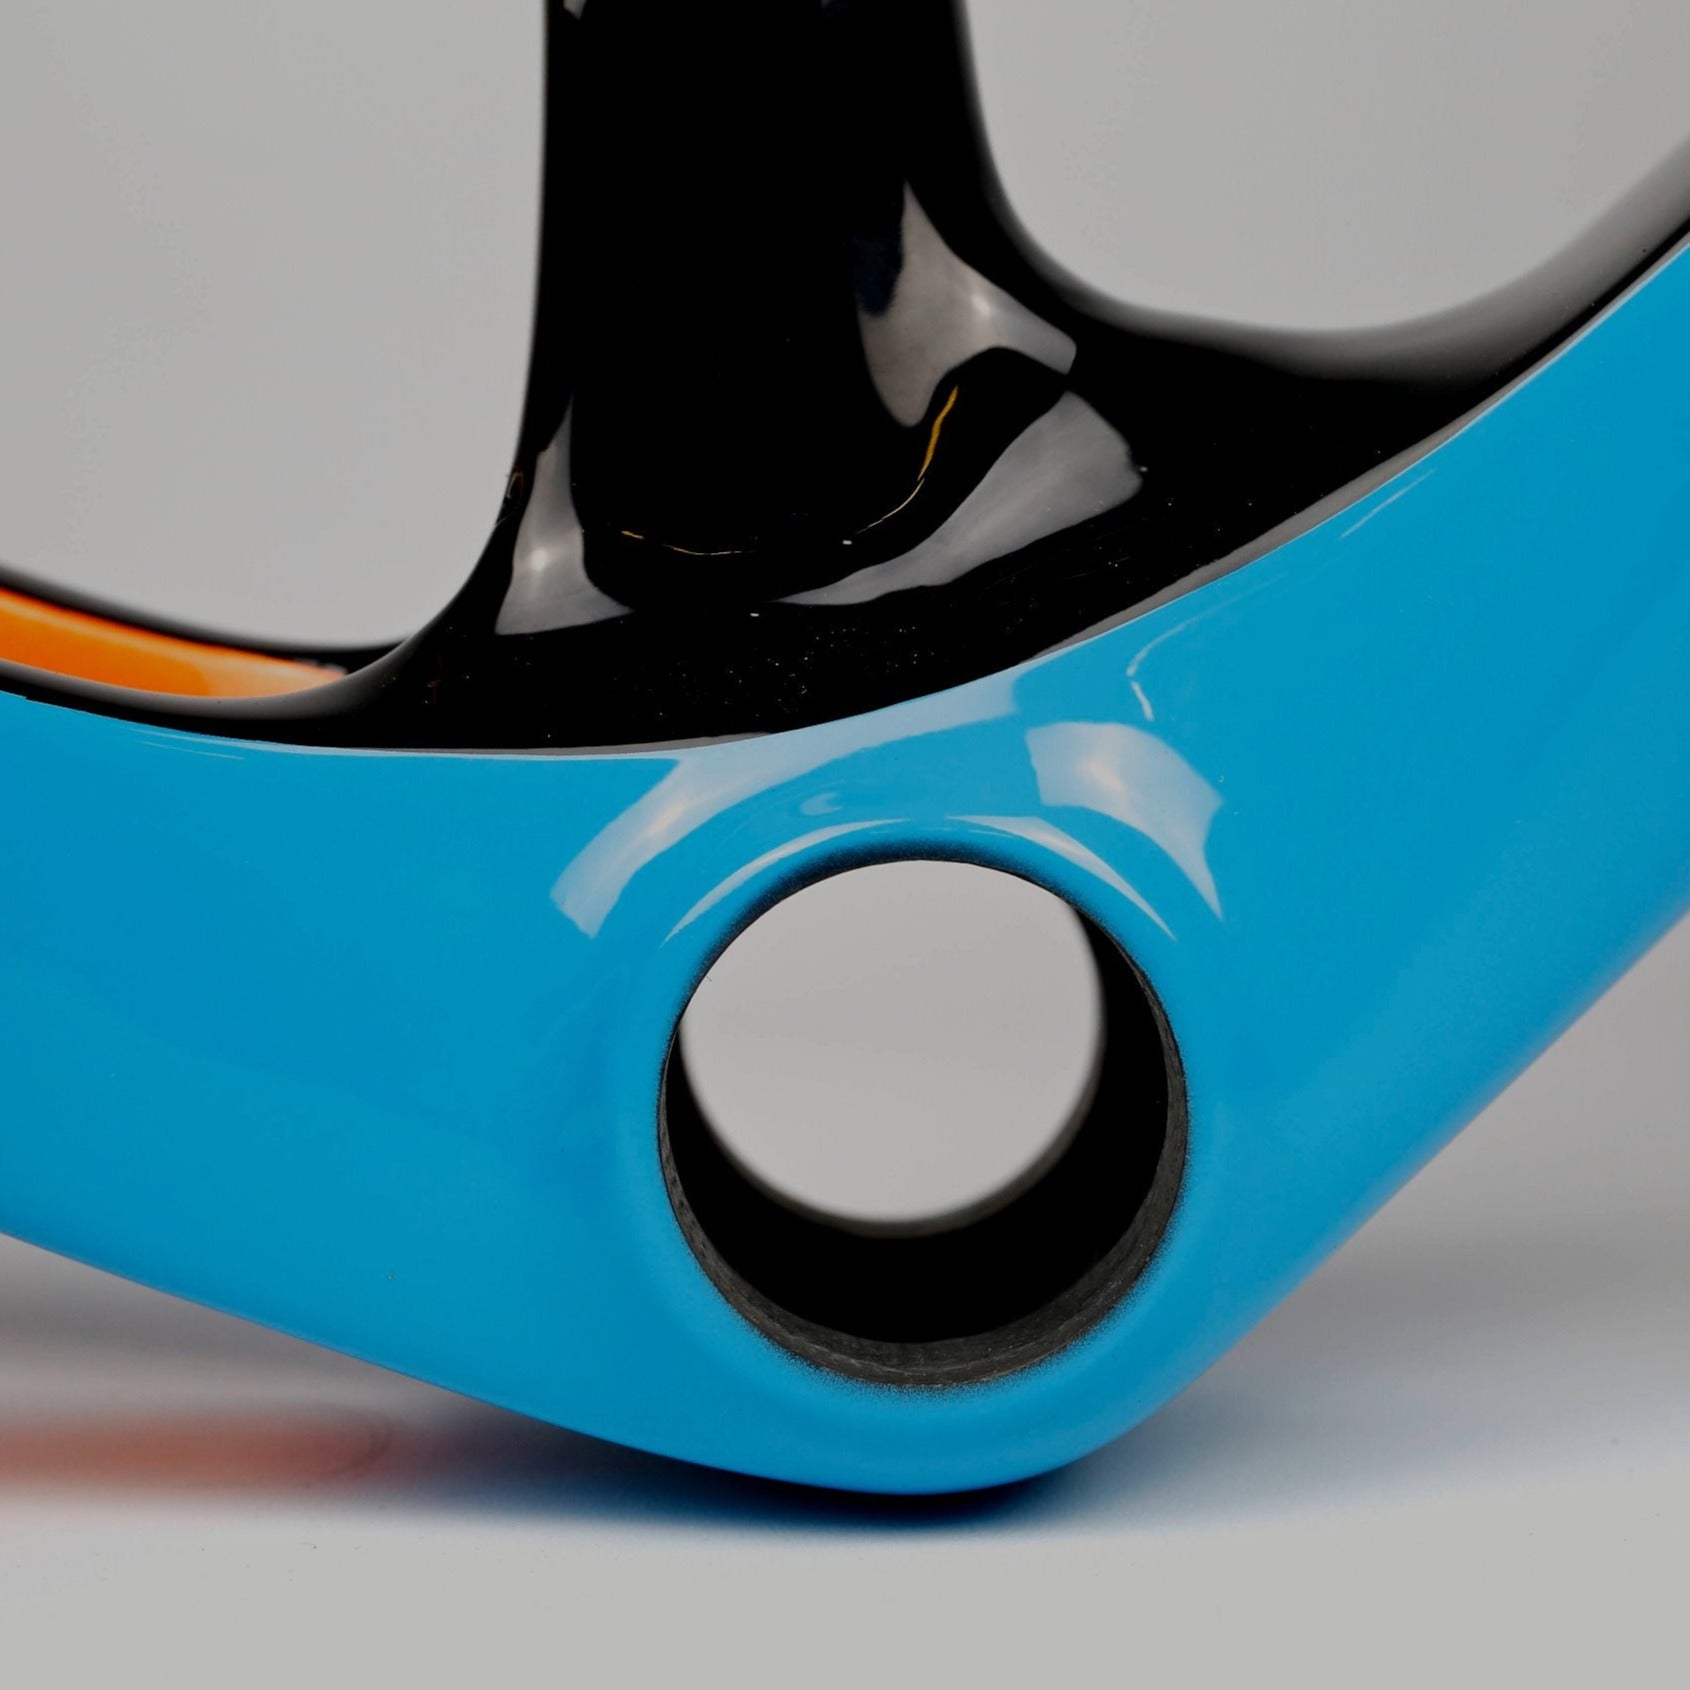 Handsling A1R0evo frame – Team Racing Blue and Orange